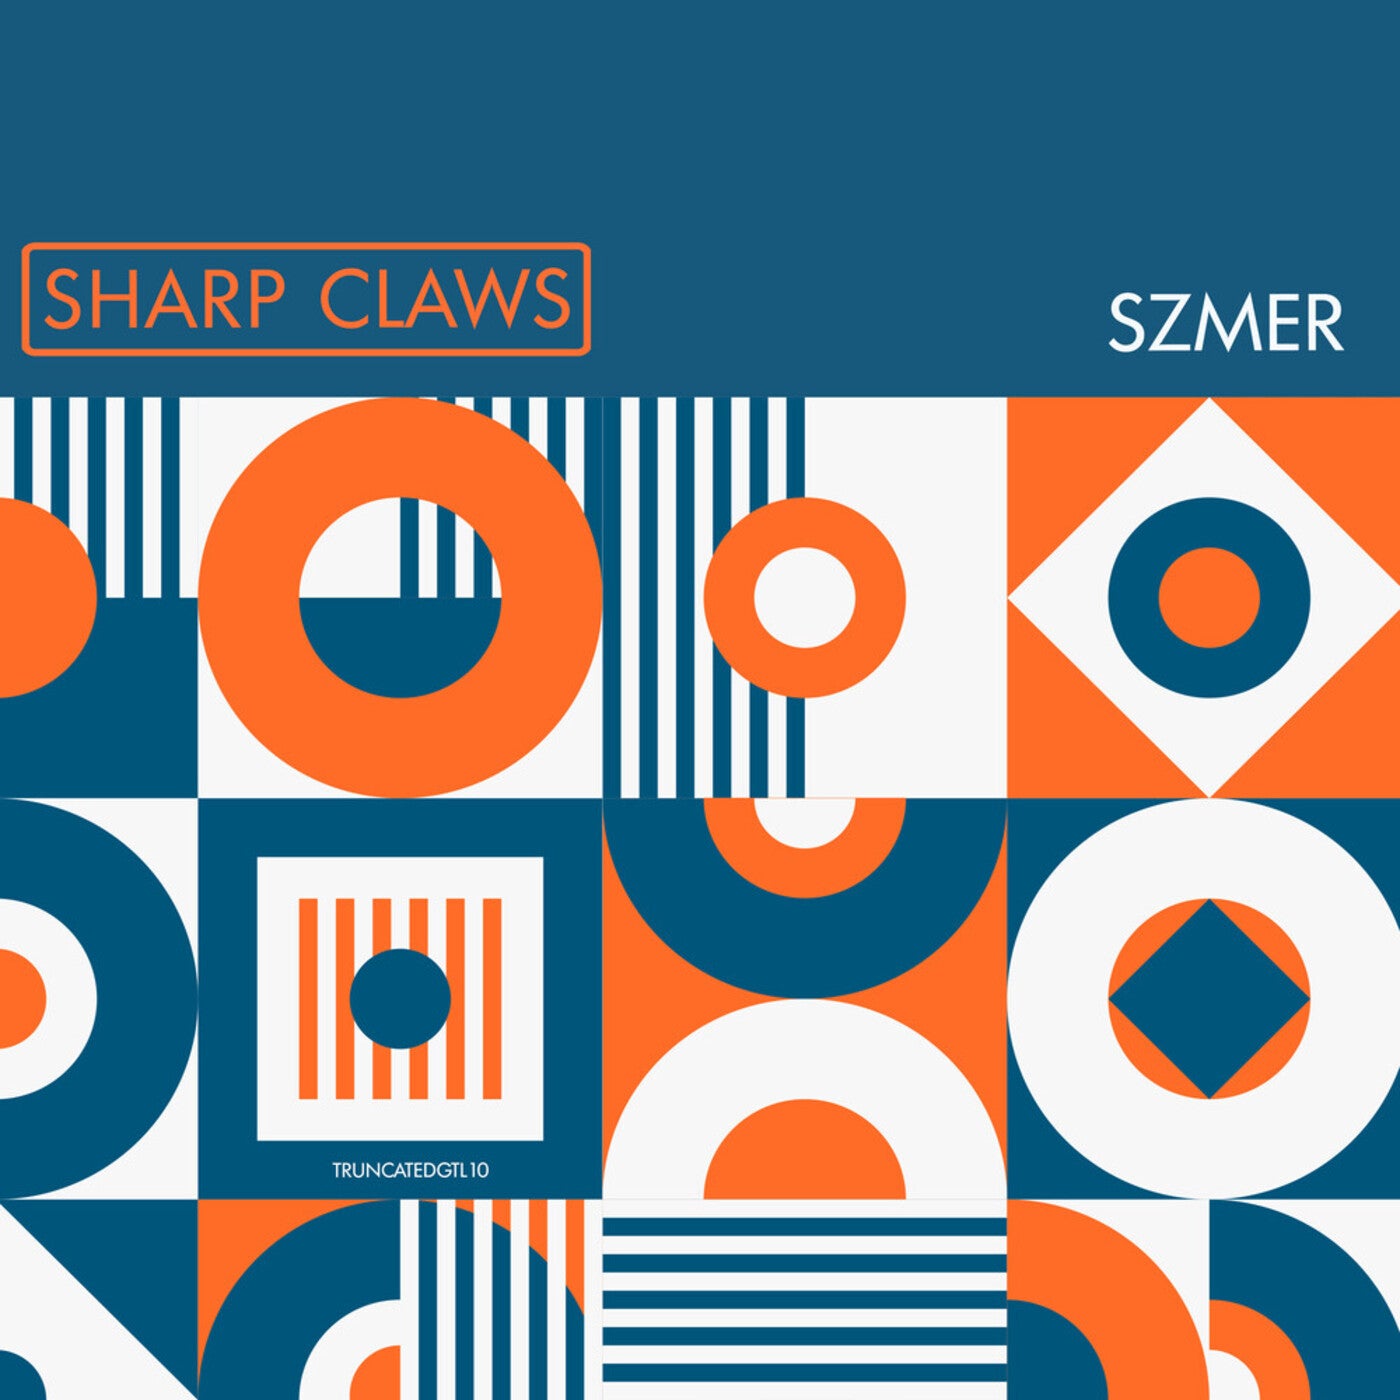 Szmer - Sharp Claws [TRUNCATEDGTL10]